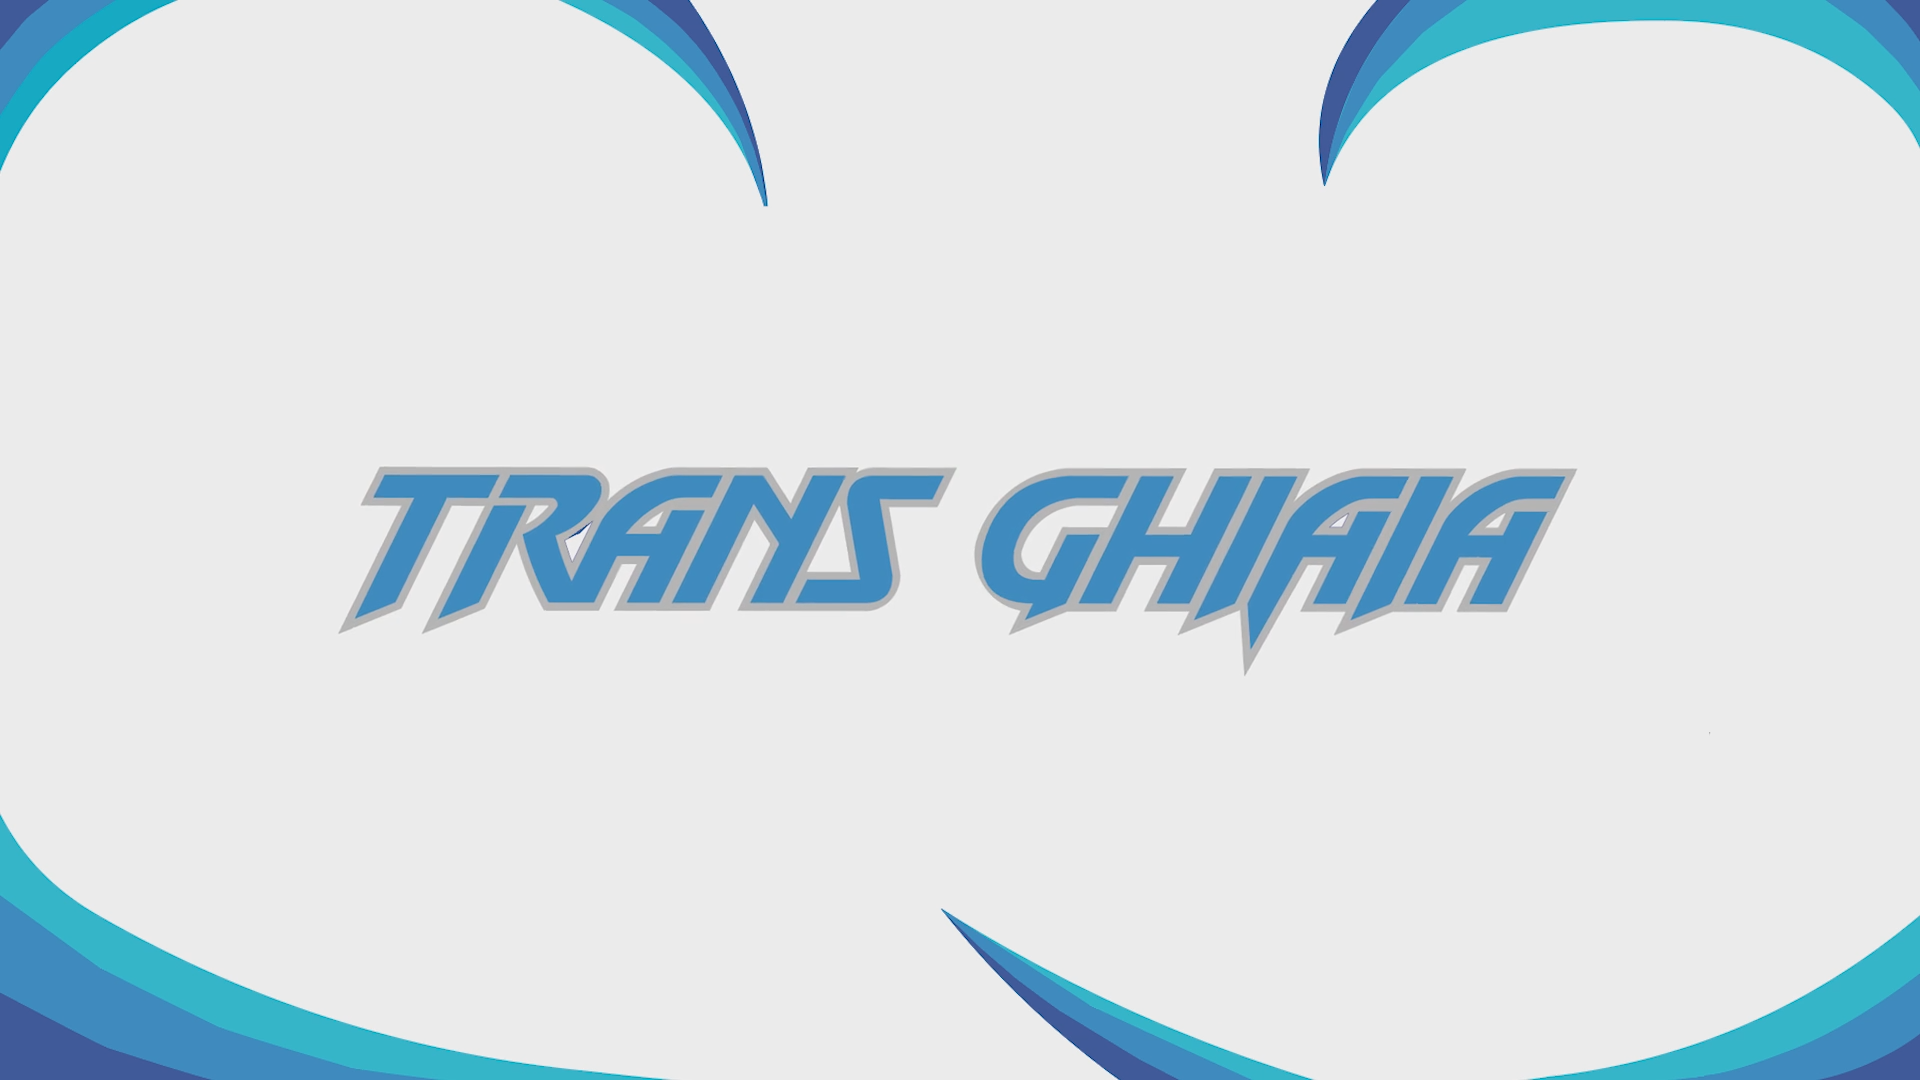 Trans Ghiaia logo